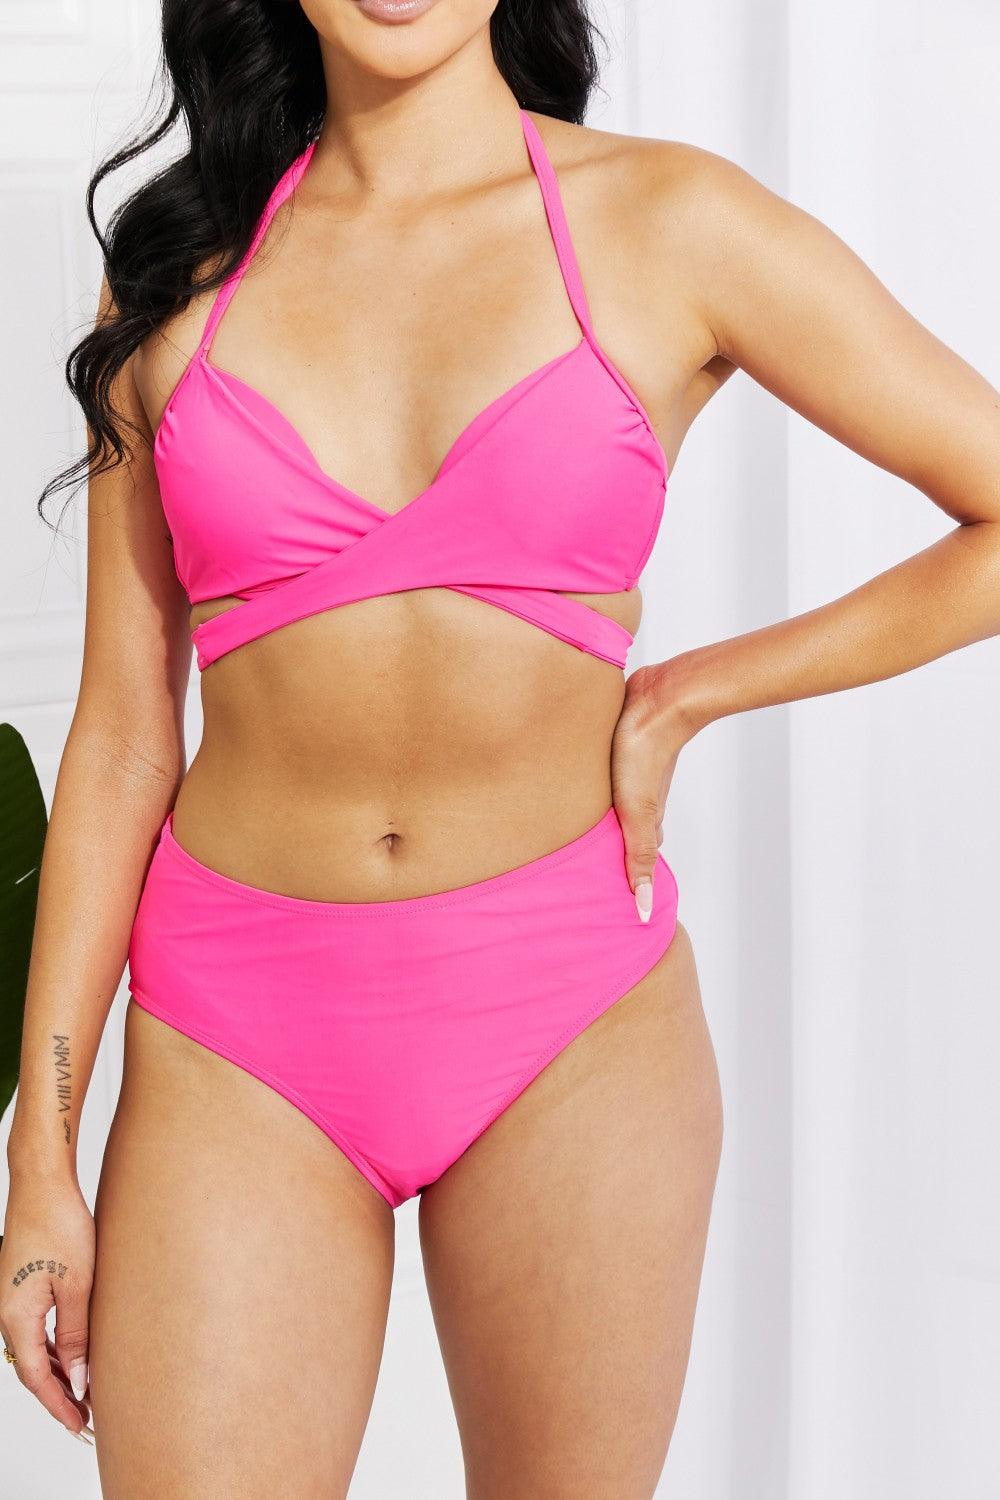 Marina West Swim Summer Splash Halter Bikini Set in Pink - Laguna Looks